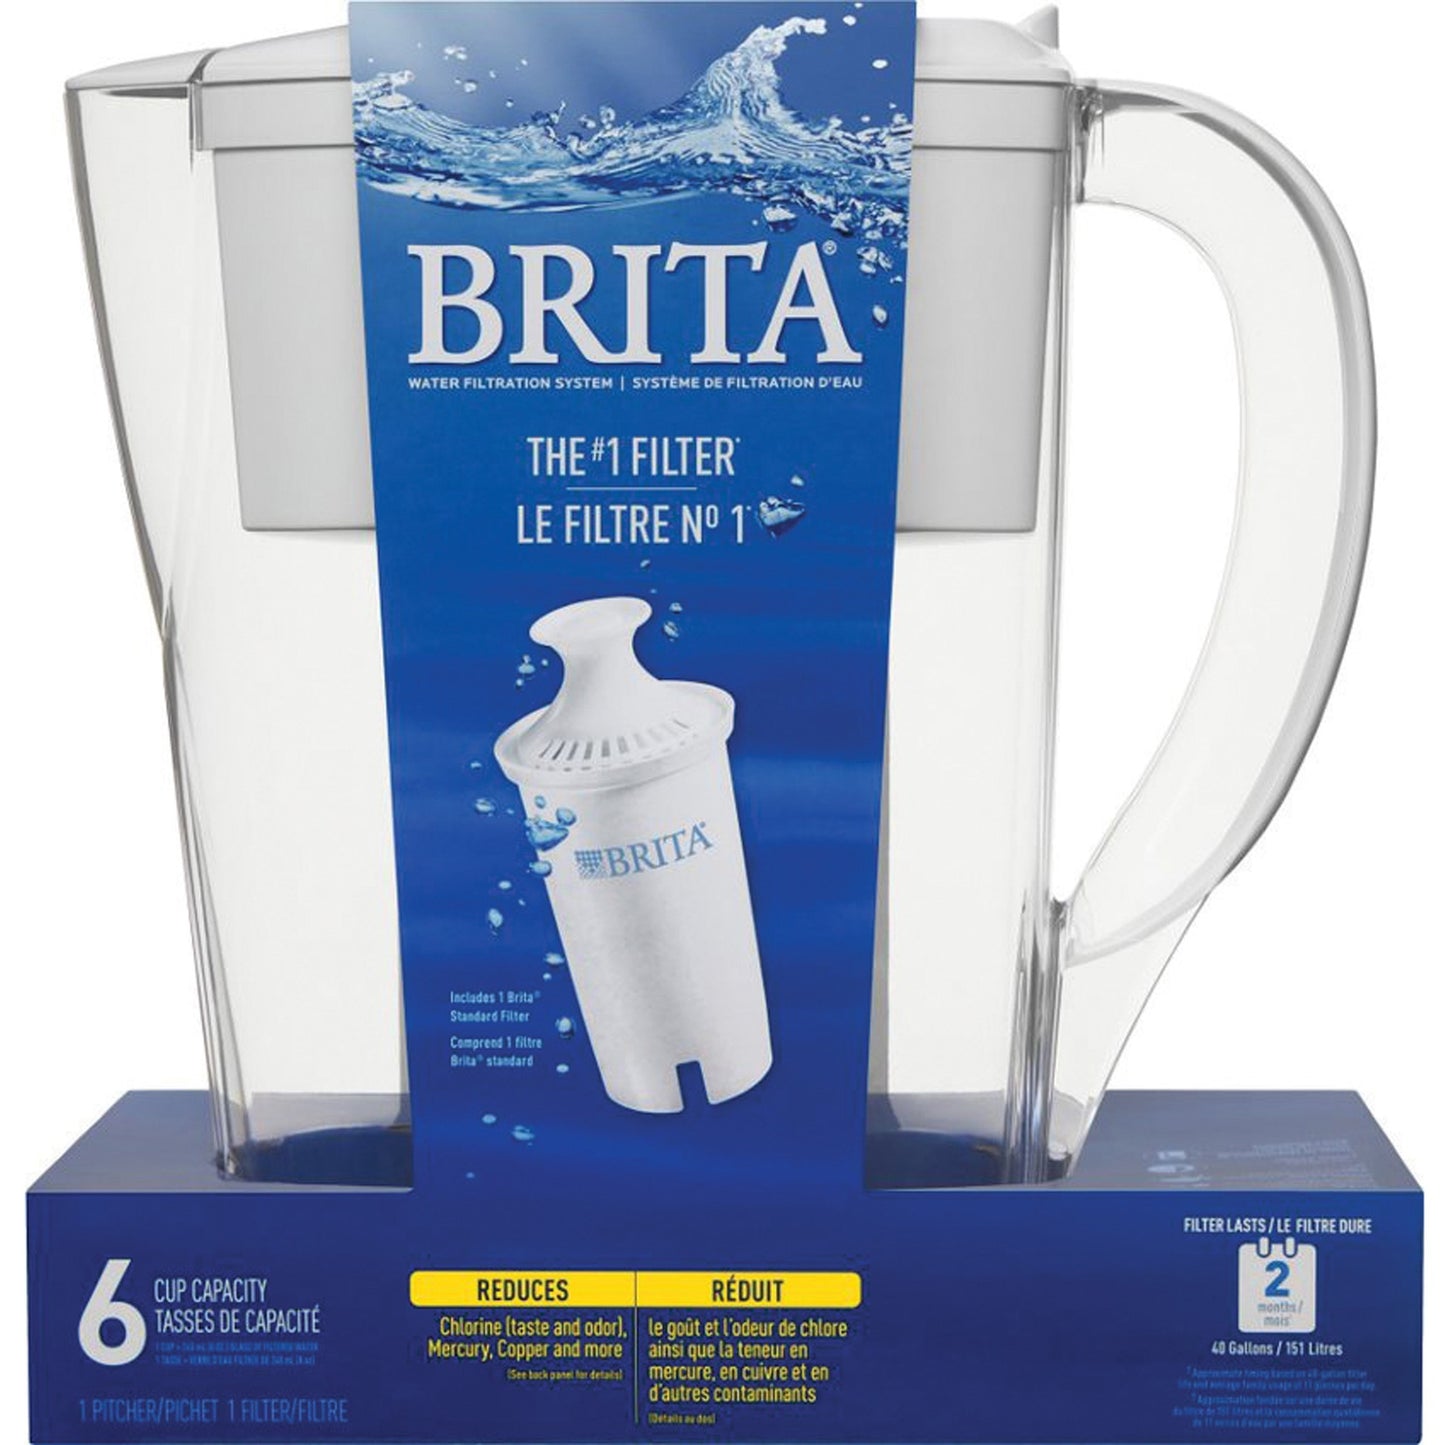 Brita Space Saver Water Filter Pitcher